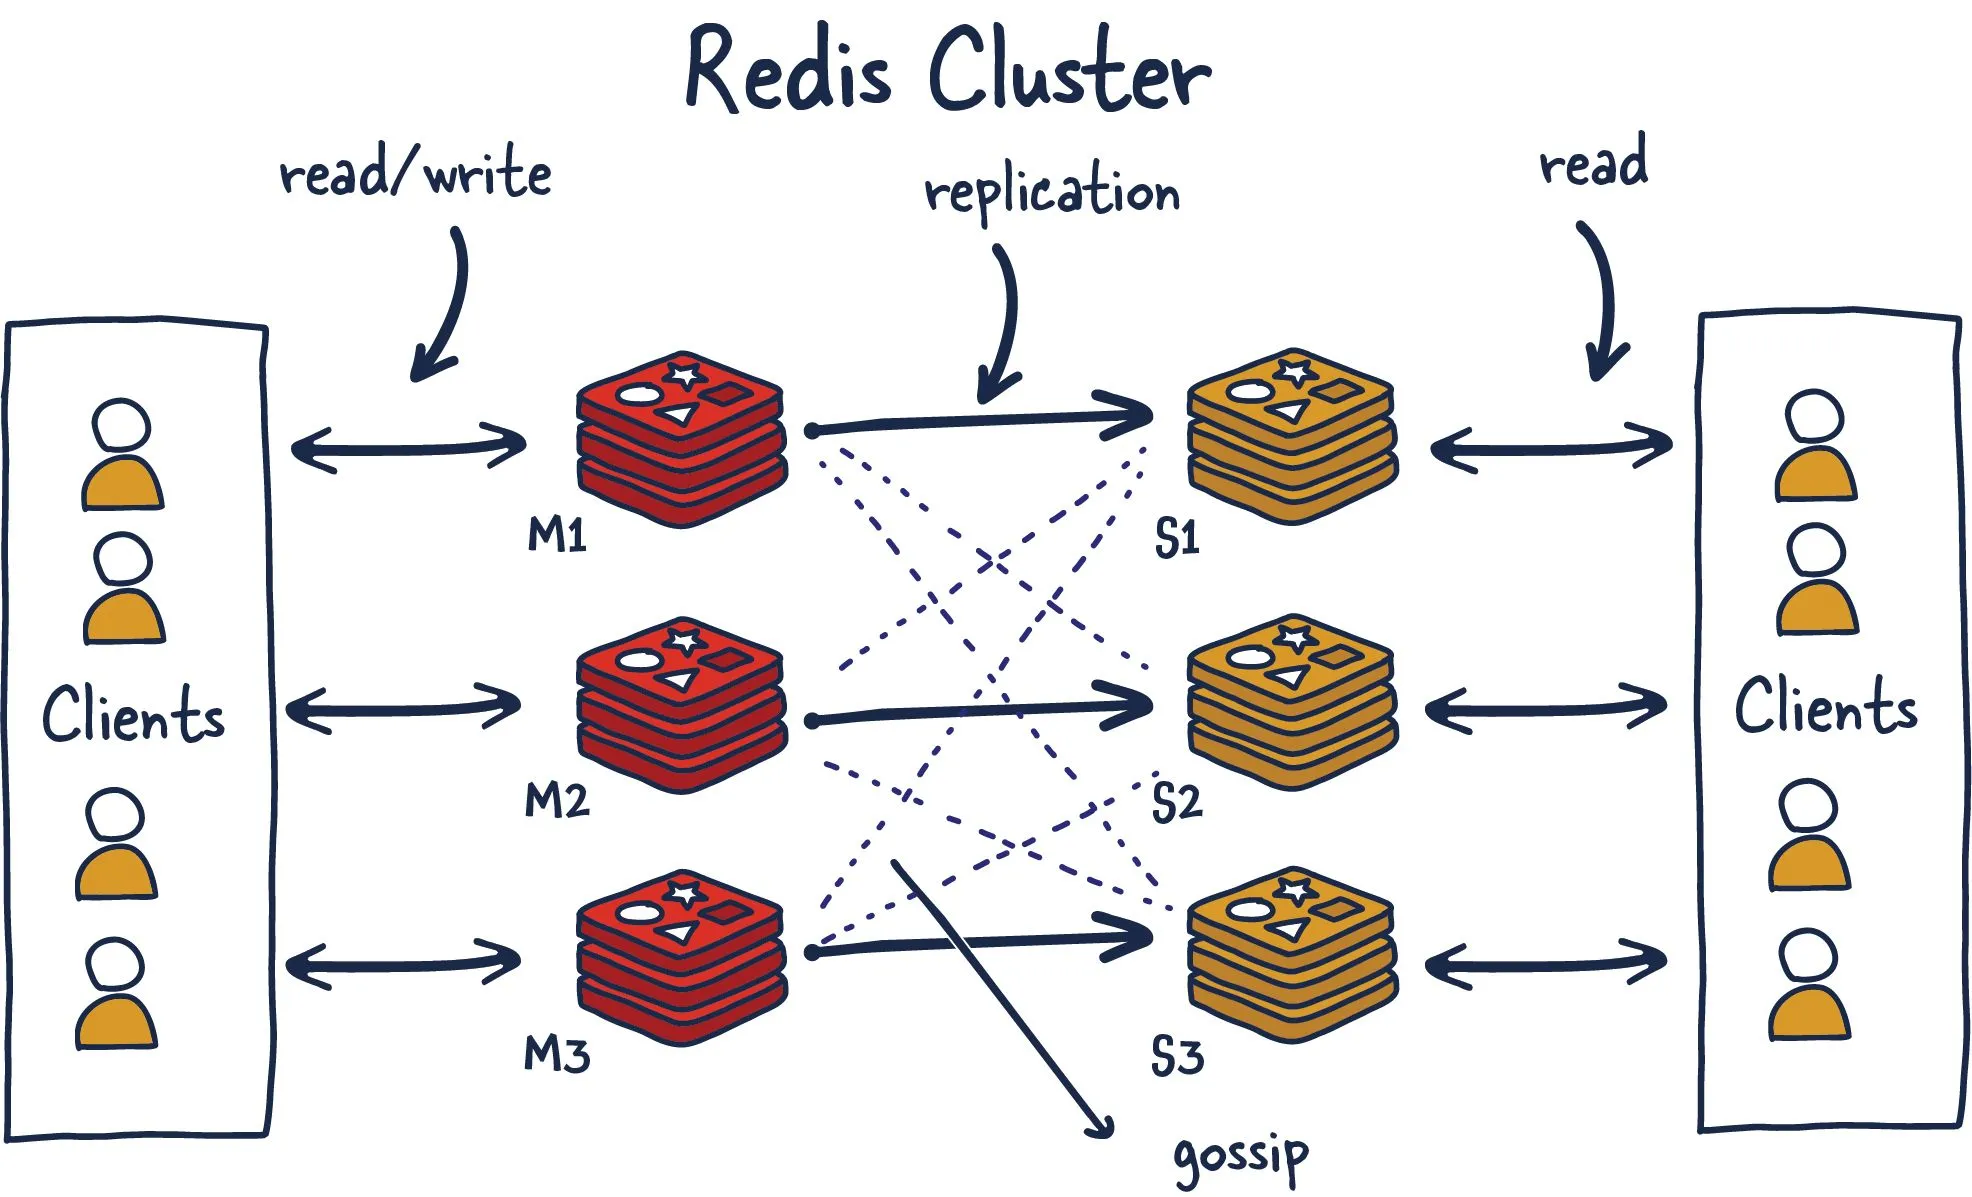 Redis Cluster Architecture